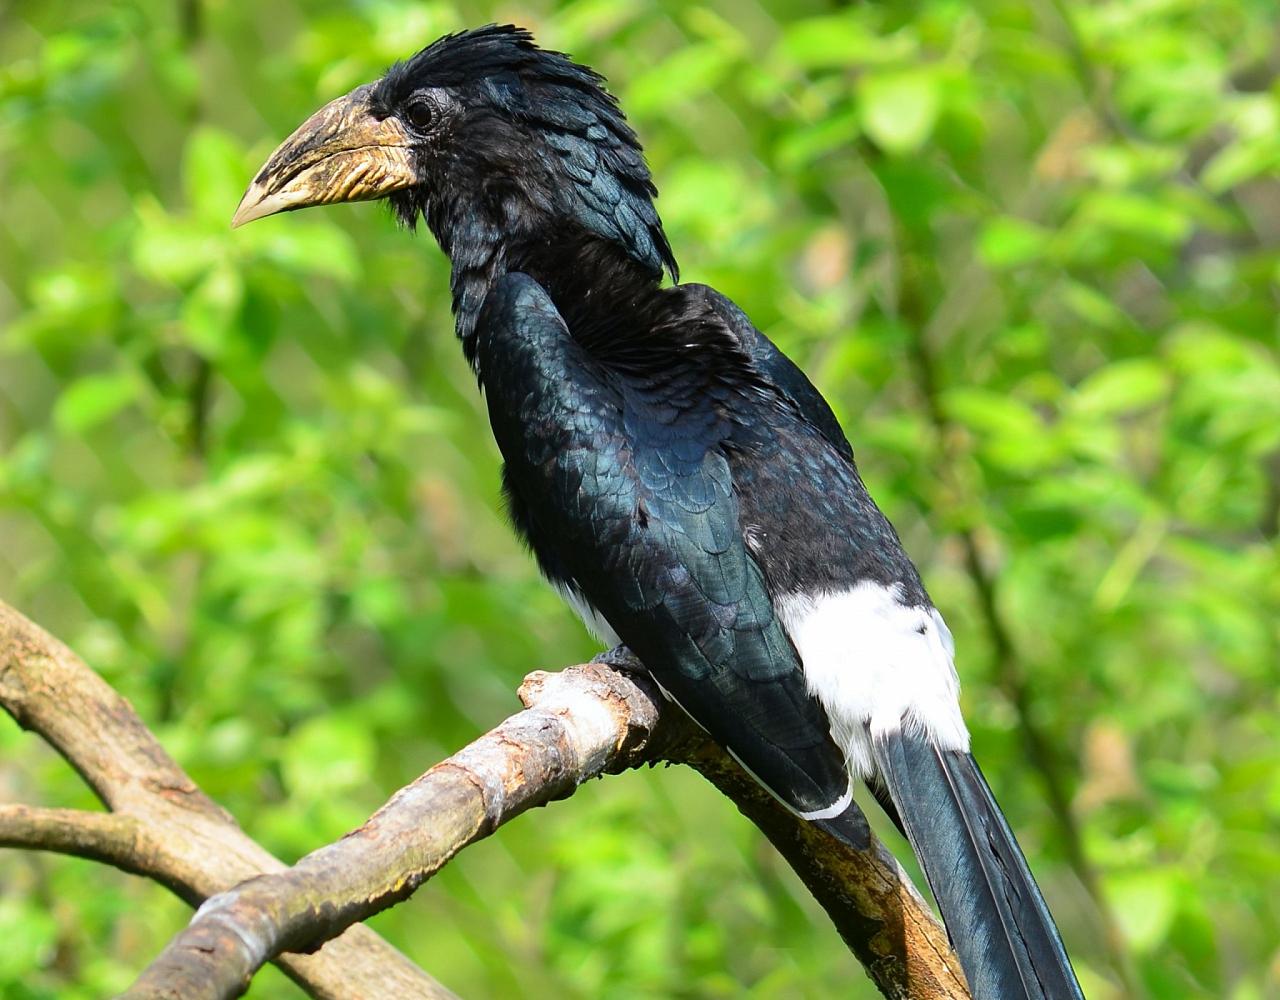 Piping Hornbill, Ghana Nature Tour, West Africa, African Safari, Ghana Birds, Birdwatching, Guided Nature Tour, Wildlife Photography, Ecotourism